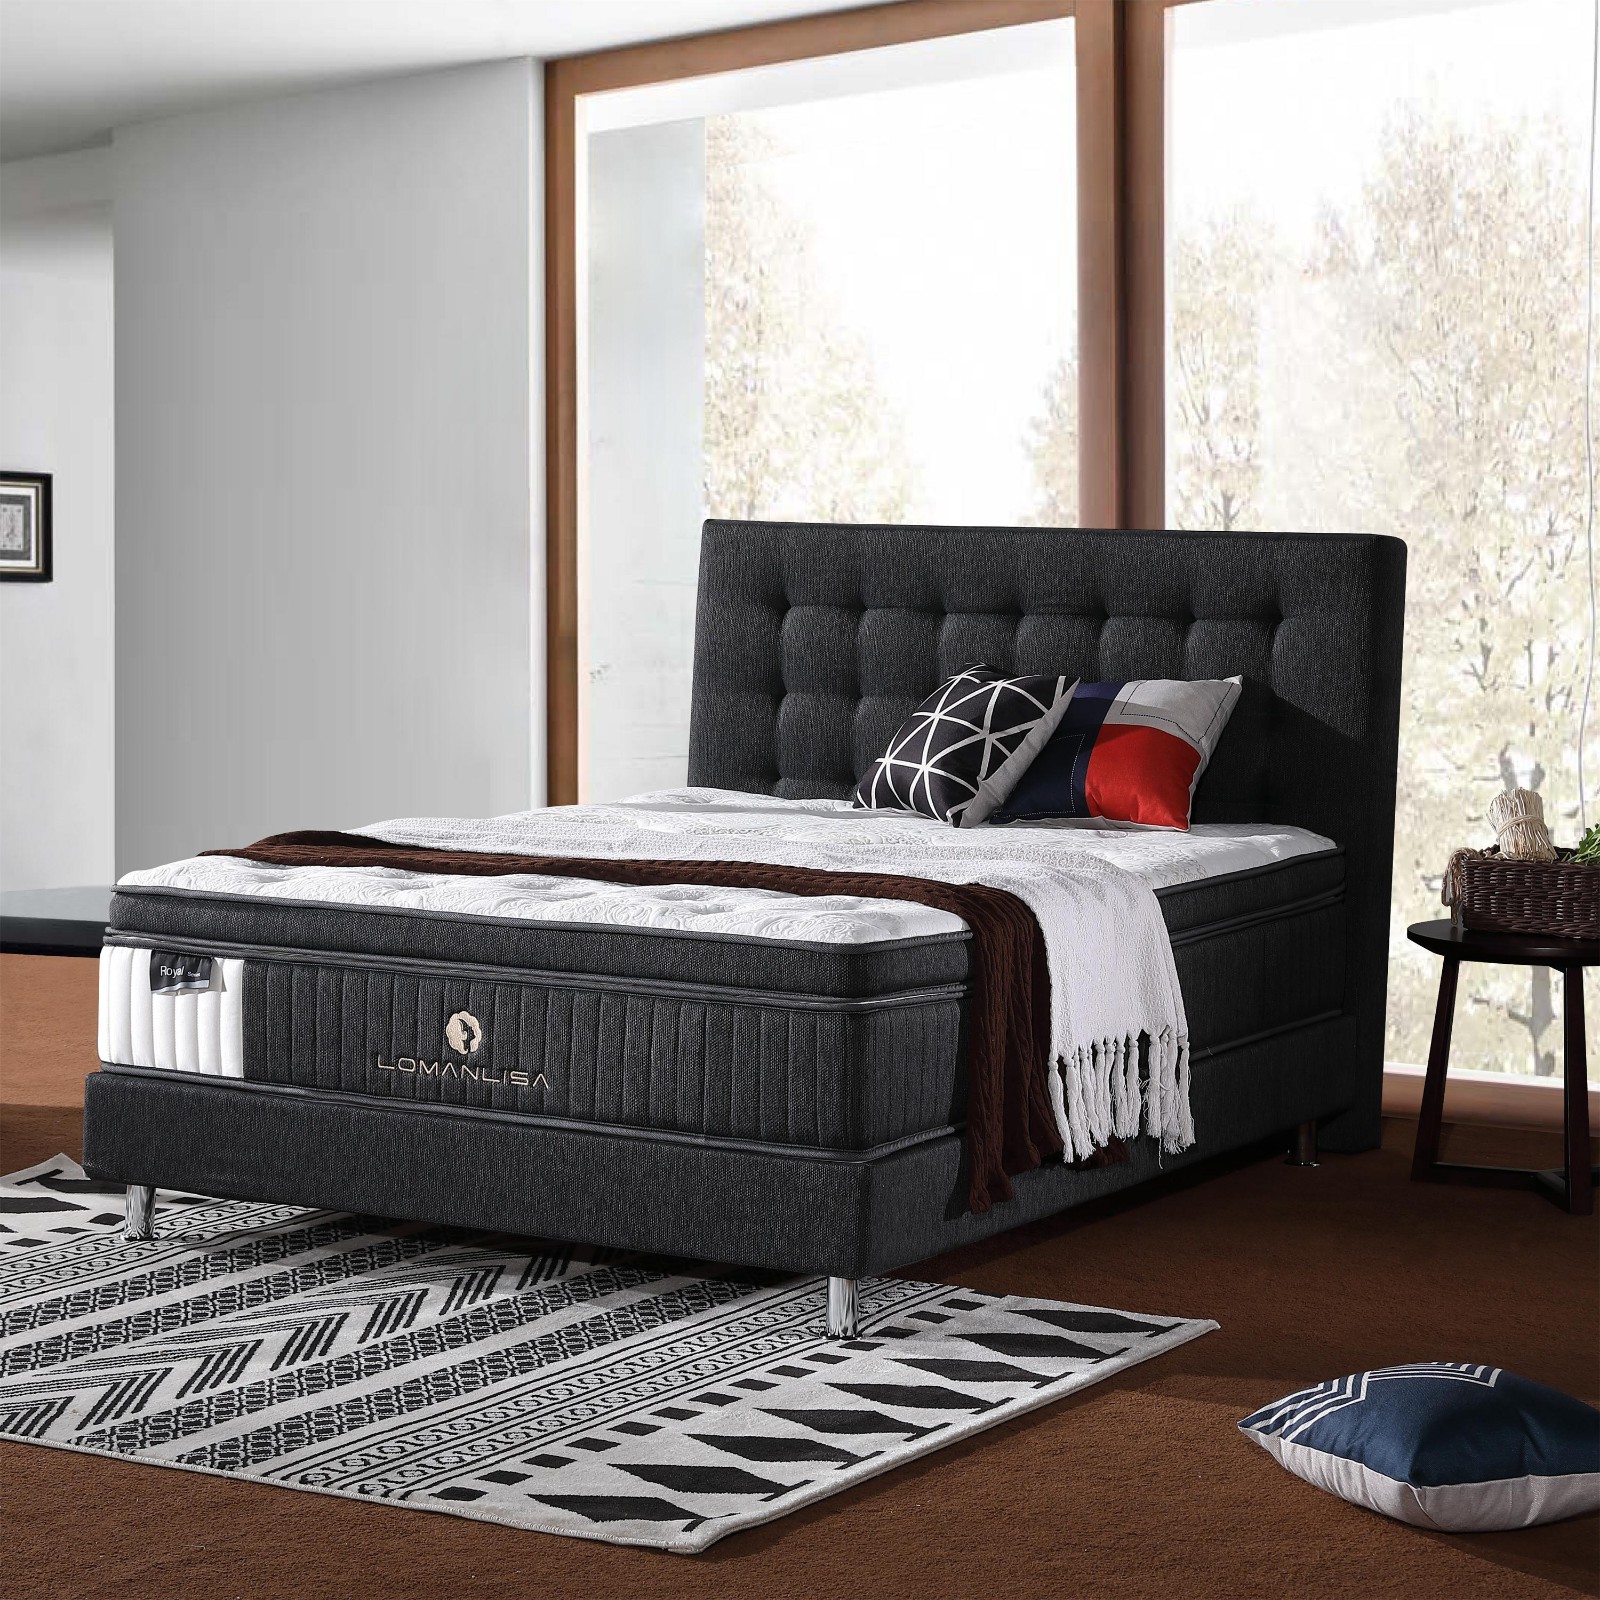 JLH best wool mattress topper Certified for bedroom-26